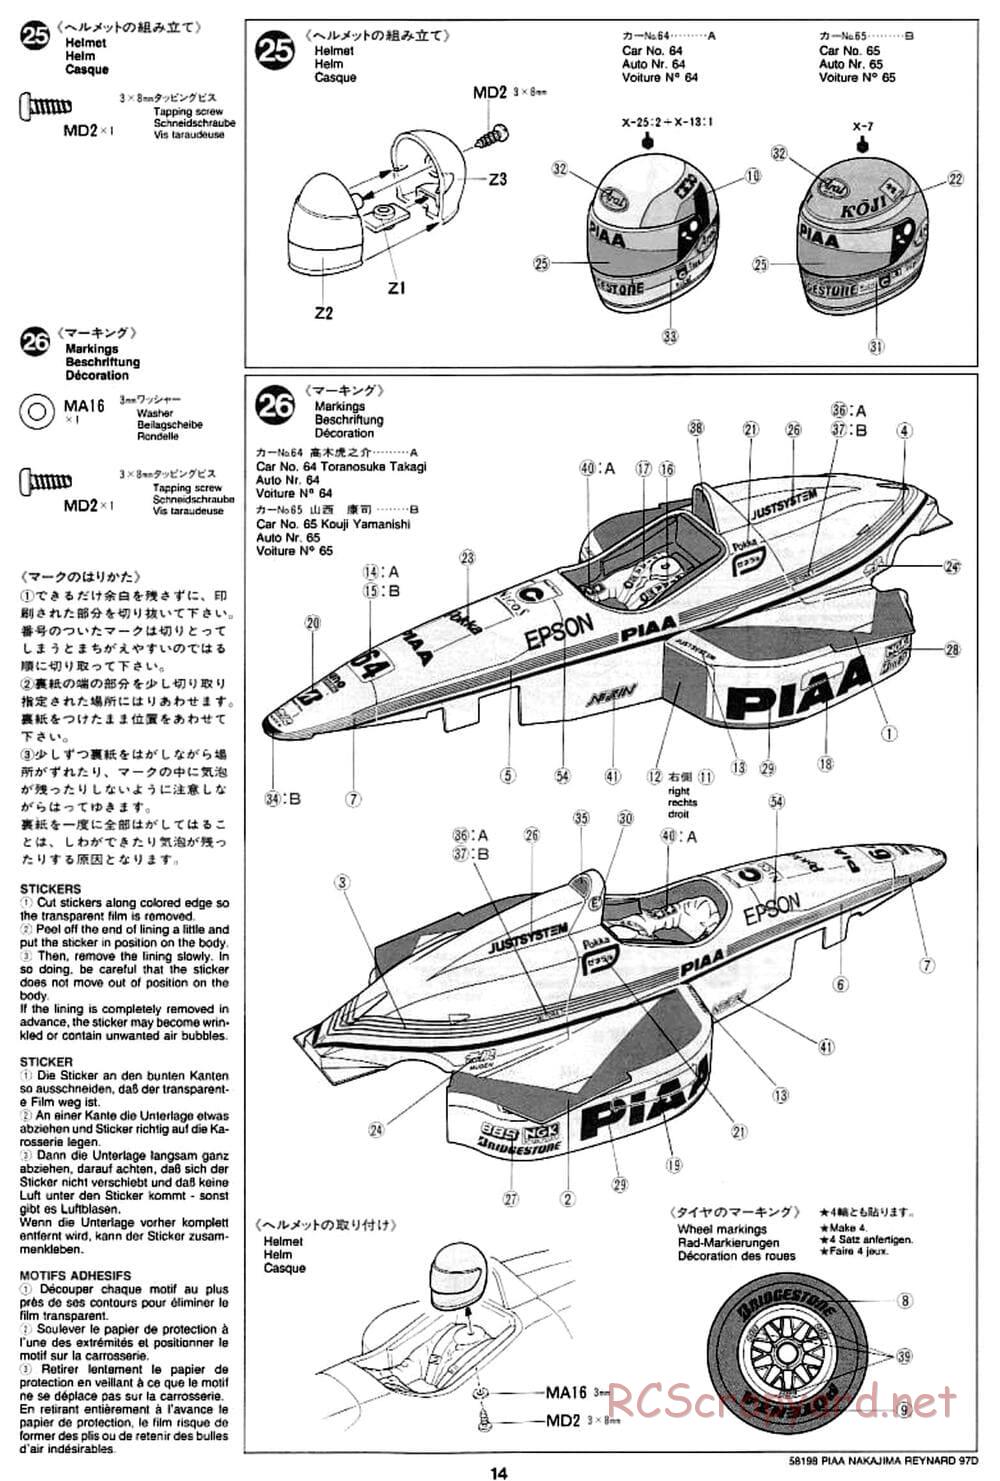 Tamiya - PIAA Nakajima Reynard 97D - F103 Chassis - Manual - Page 14